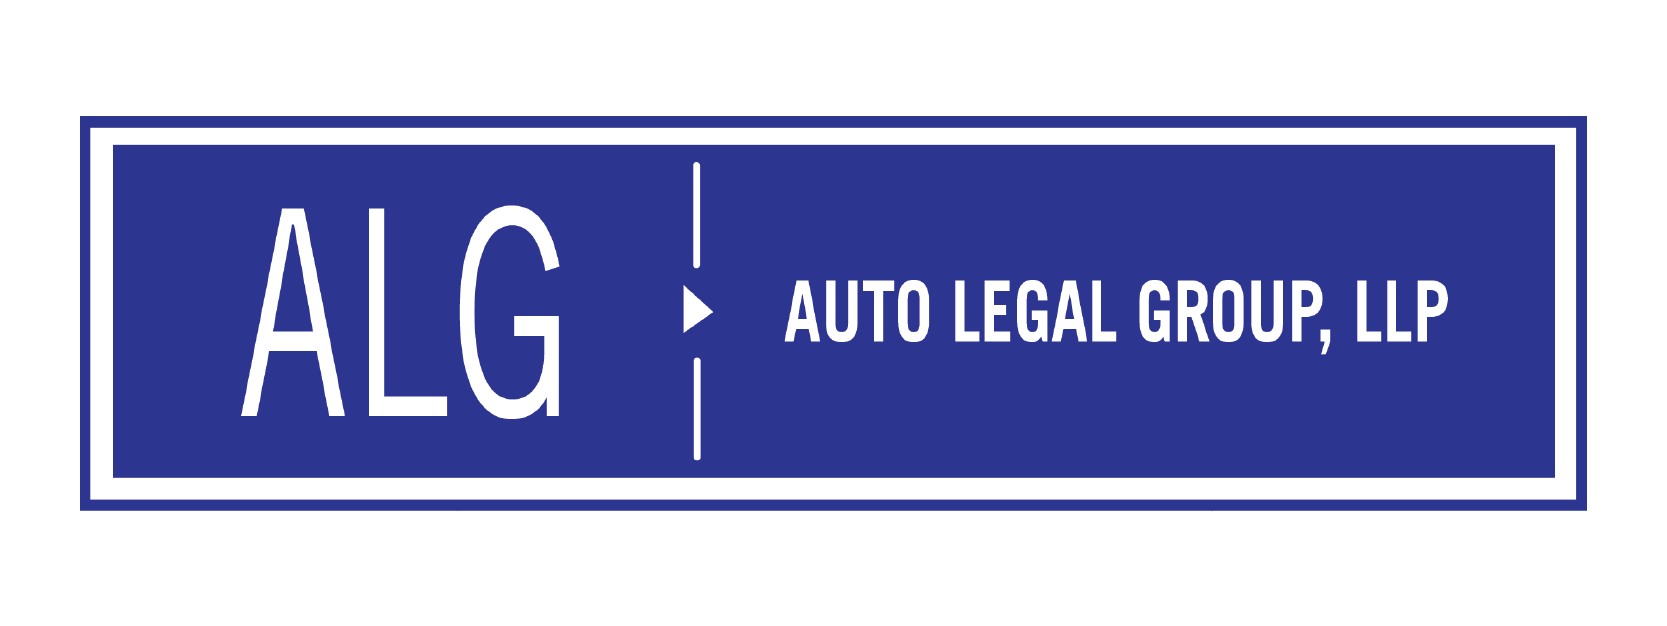 Auto Legal Group